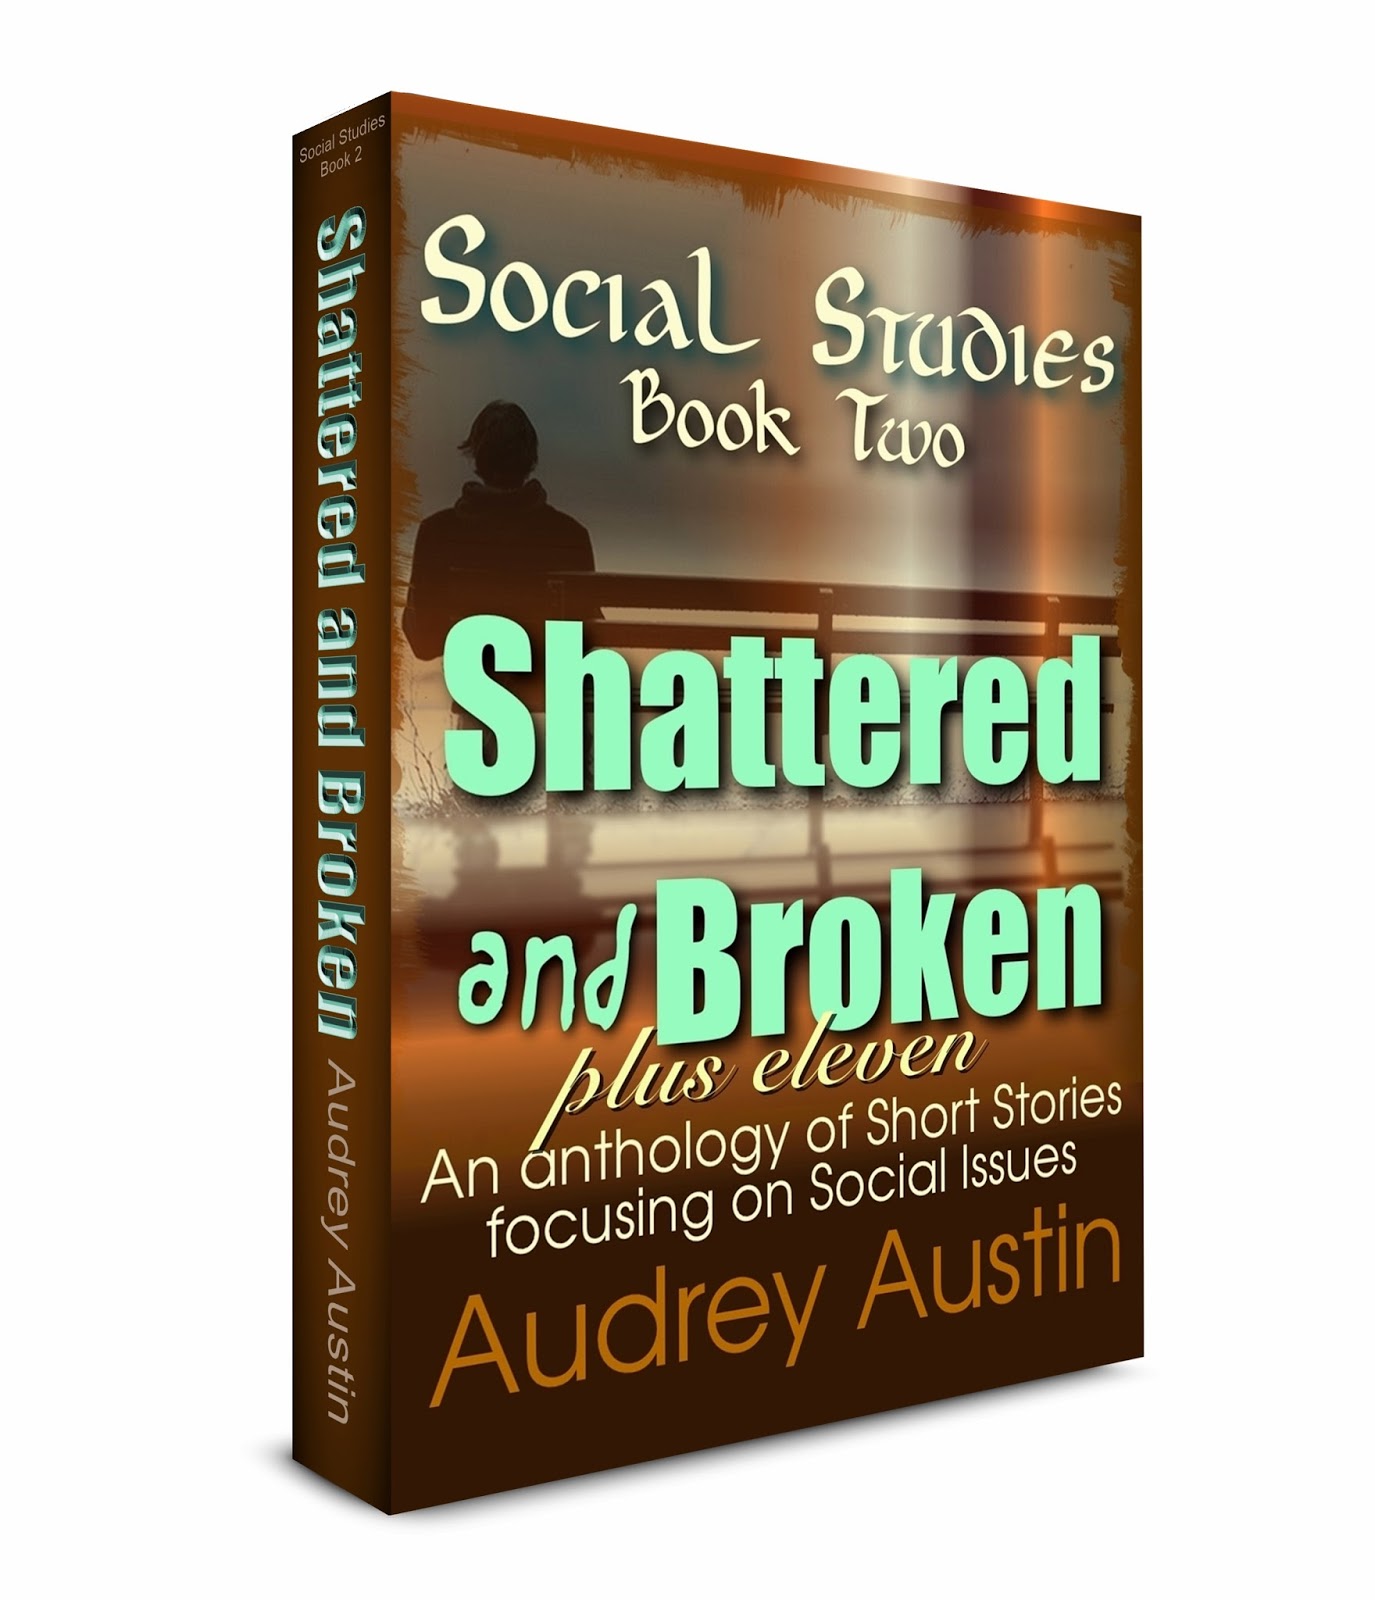 Books By Audrey Austin